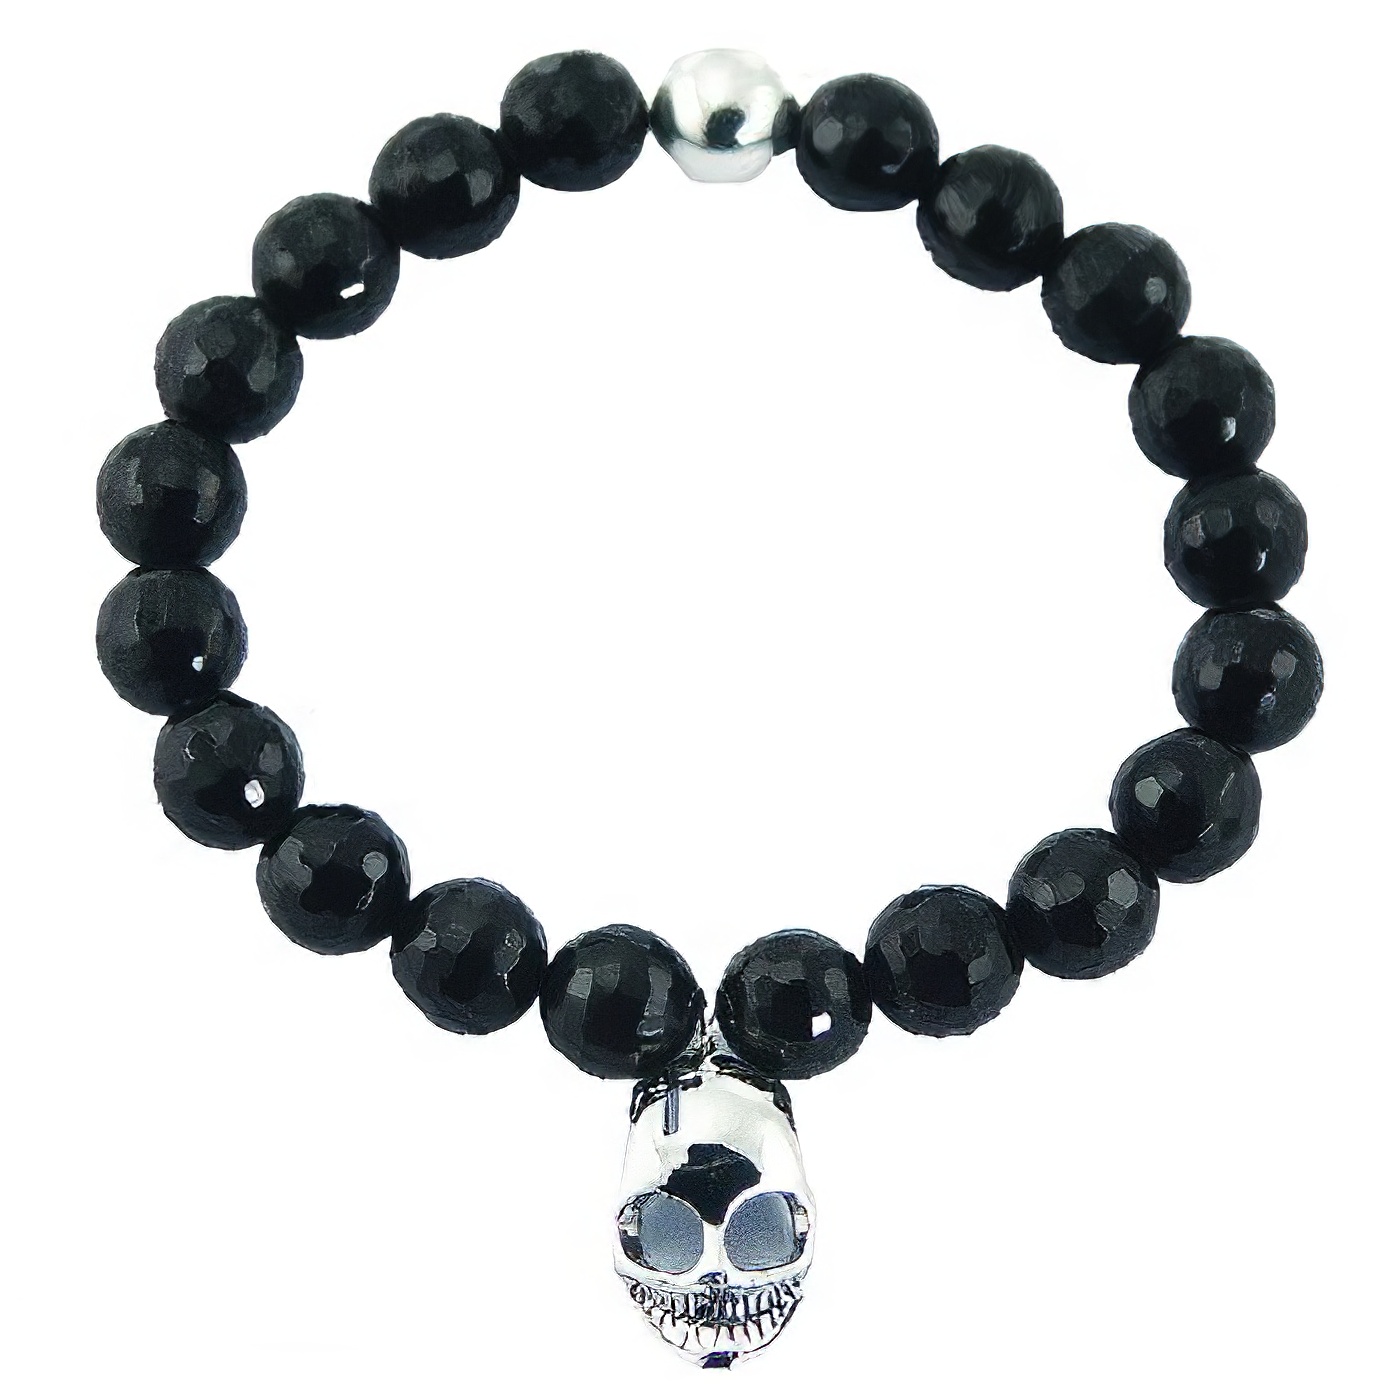 Stretch bracelet with black agate gemstone honeycomb cut and silver skull charm by BeYindi 